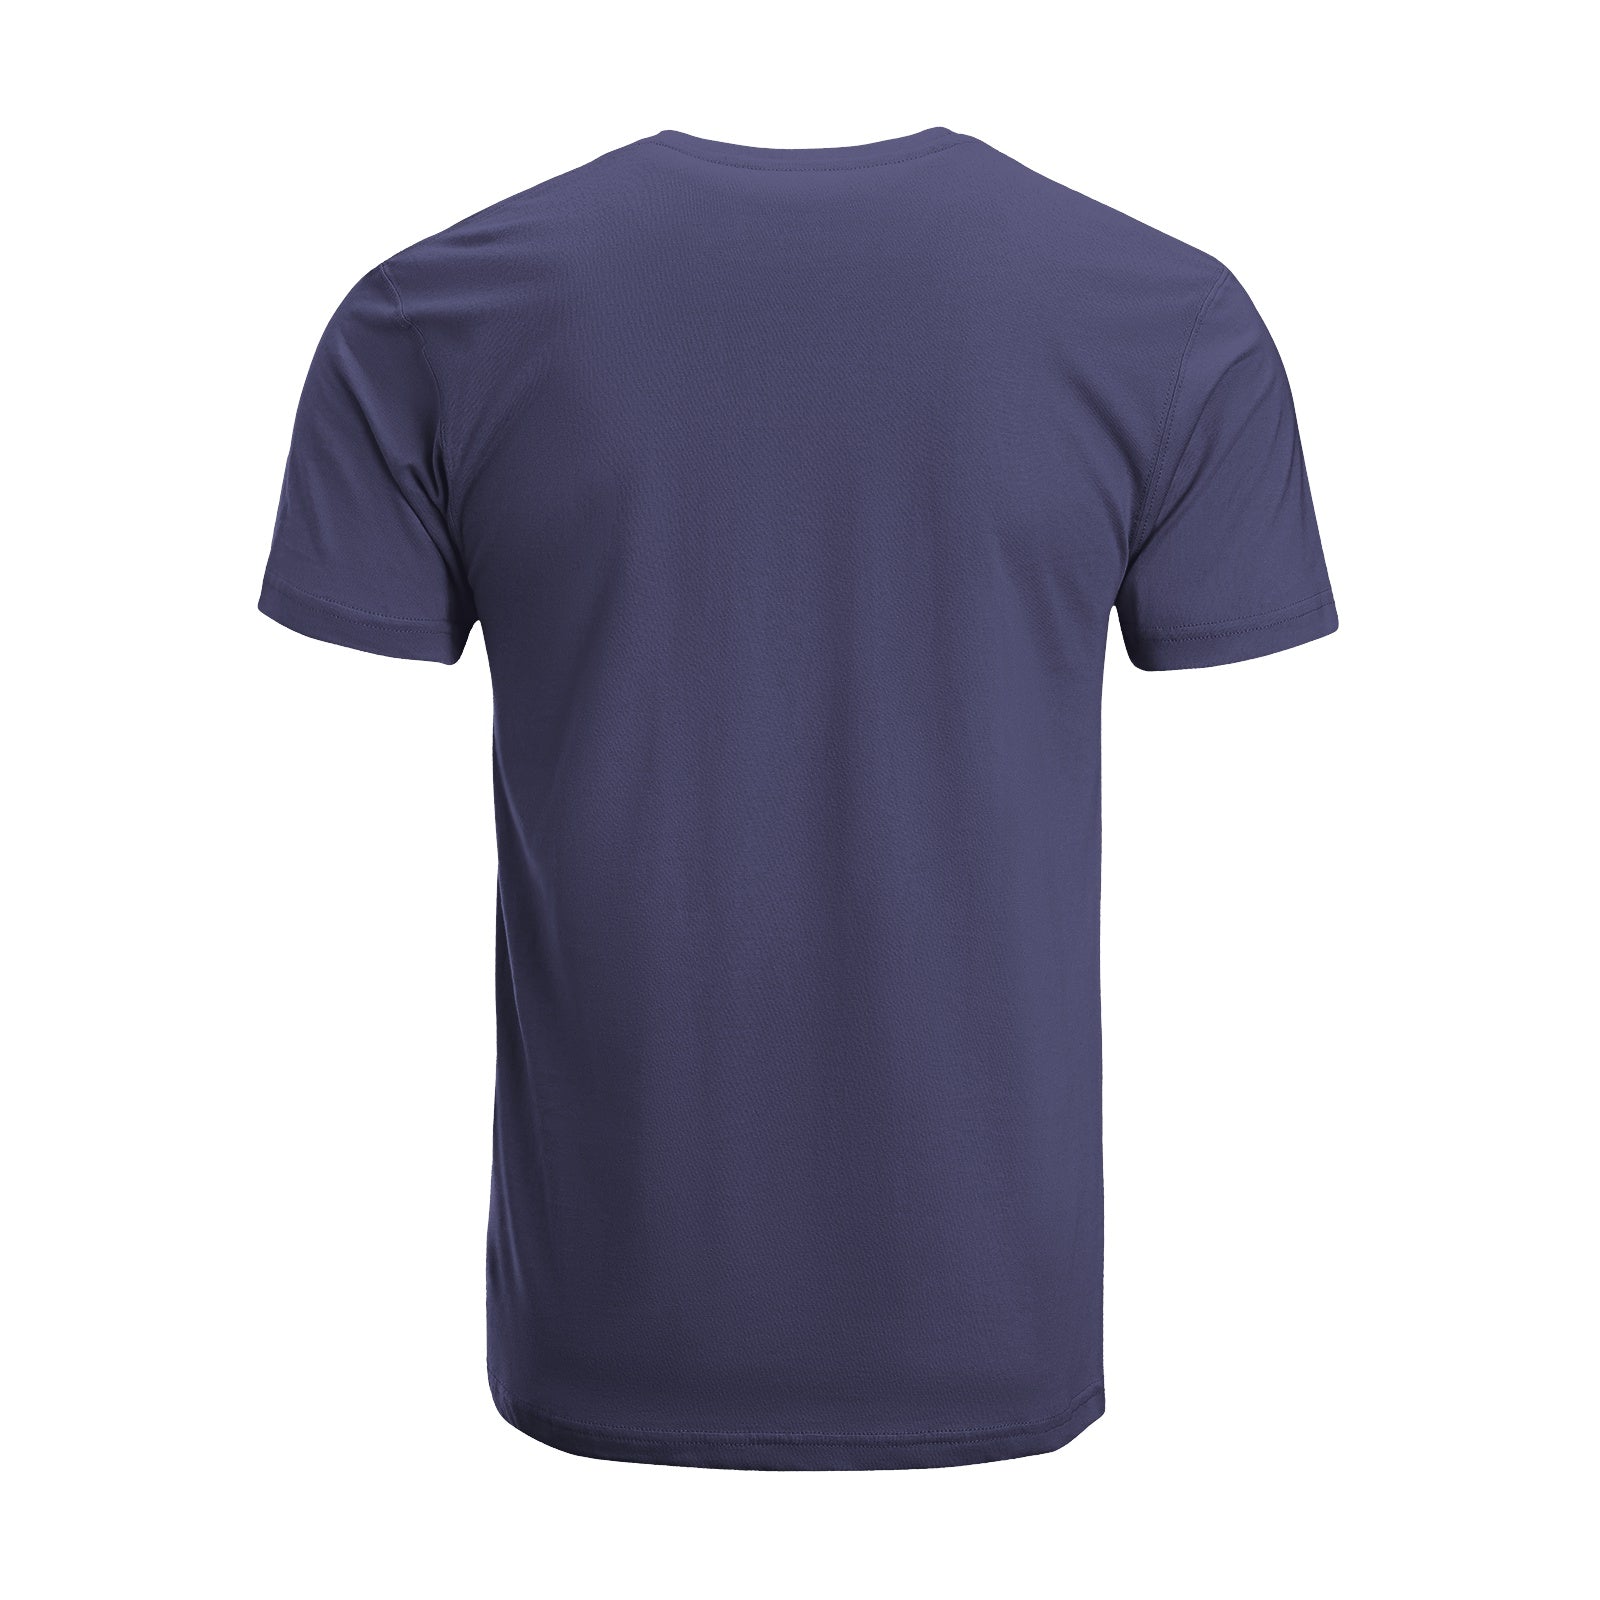 Unisex Short Sleeve Crew Neck Cotton Jersey T-Shirt CAT 05 - Tara-Outfits.com